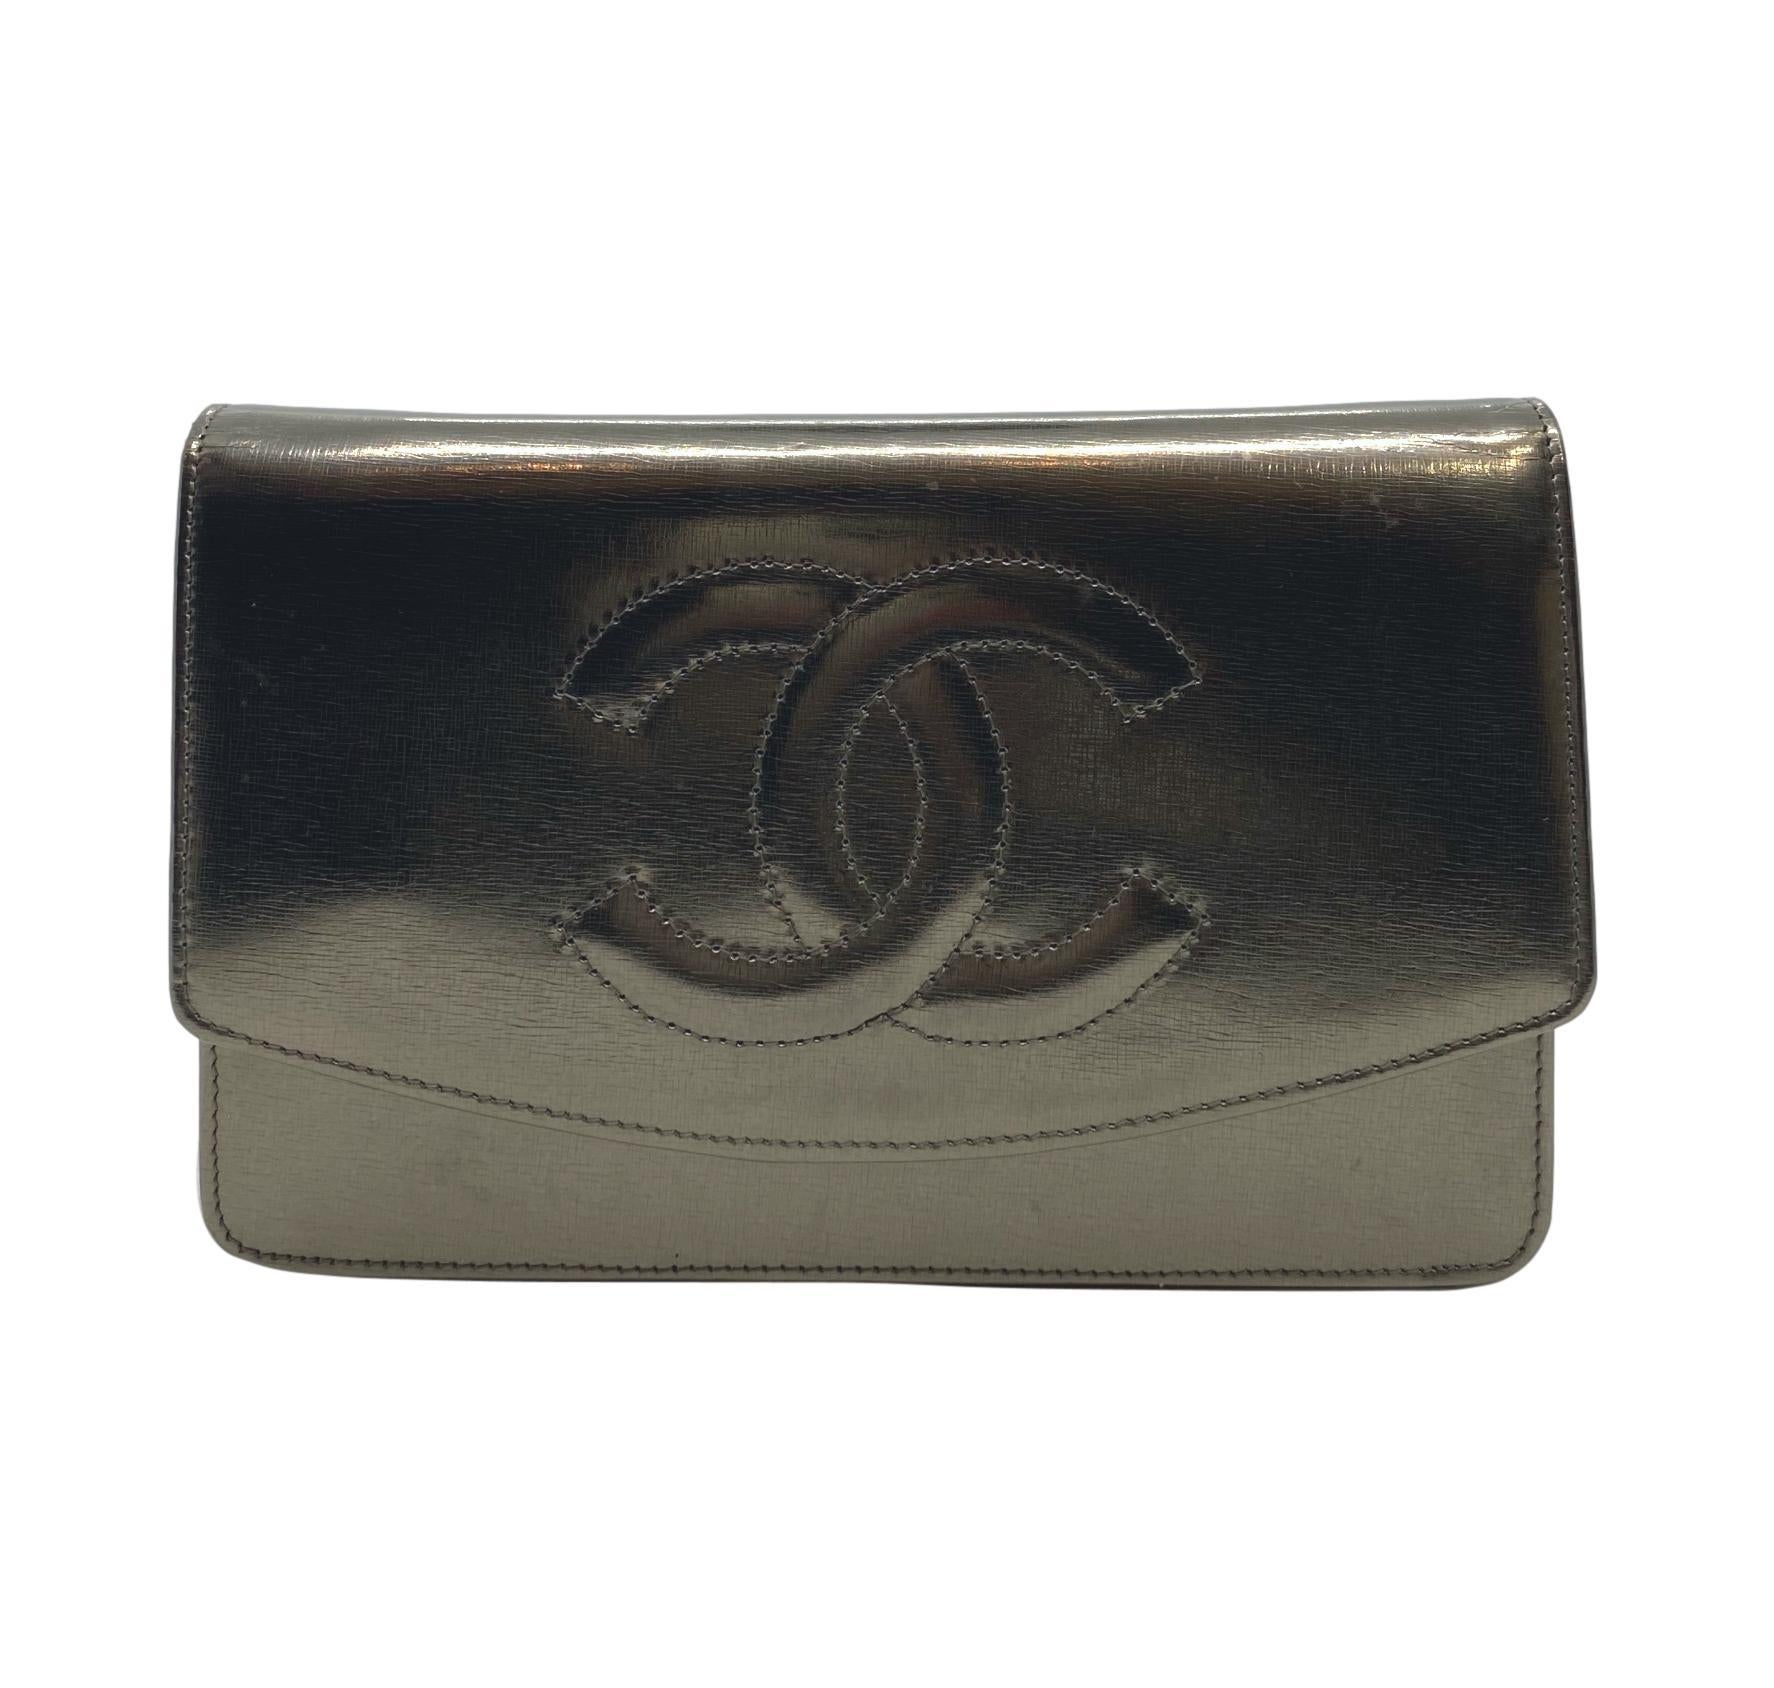 Black Chanel Timeless Metallic Leather Wallet on Chain Shoulder Clutch Bag, 2008.